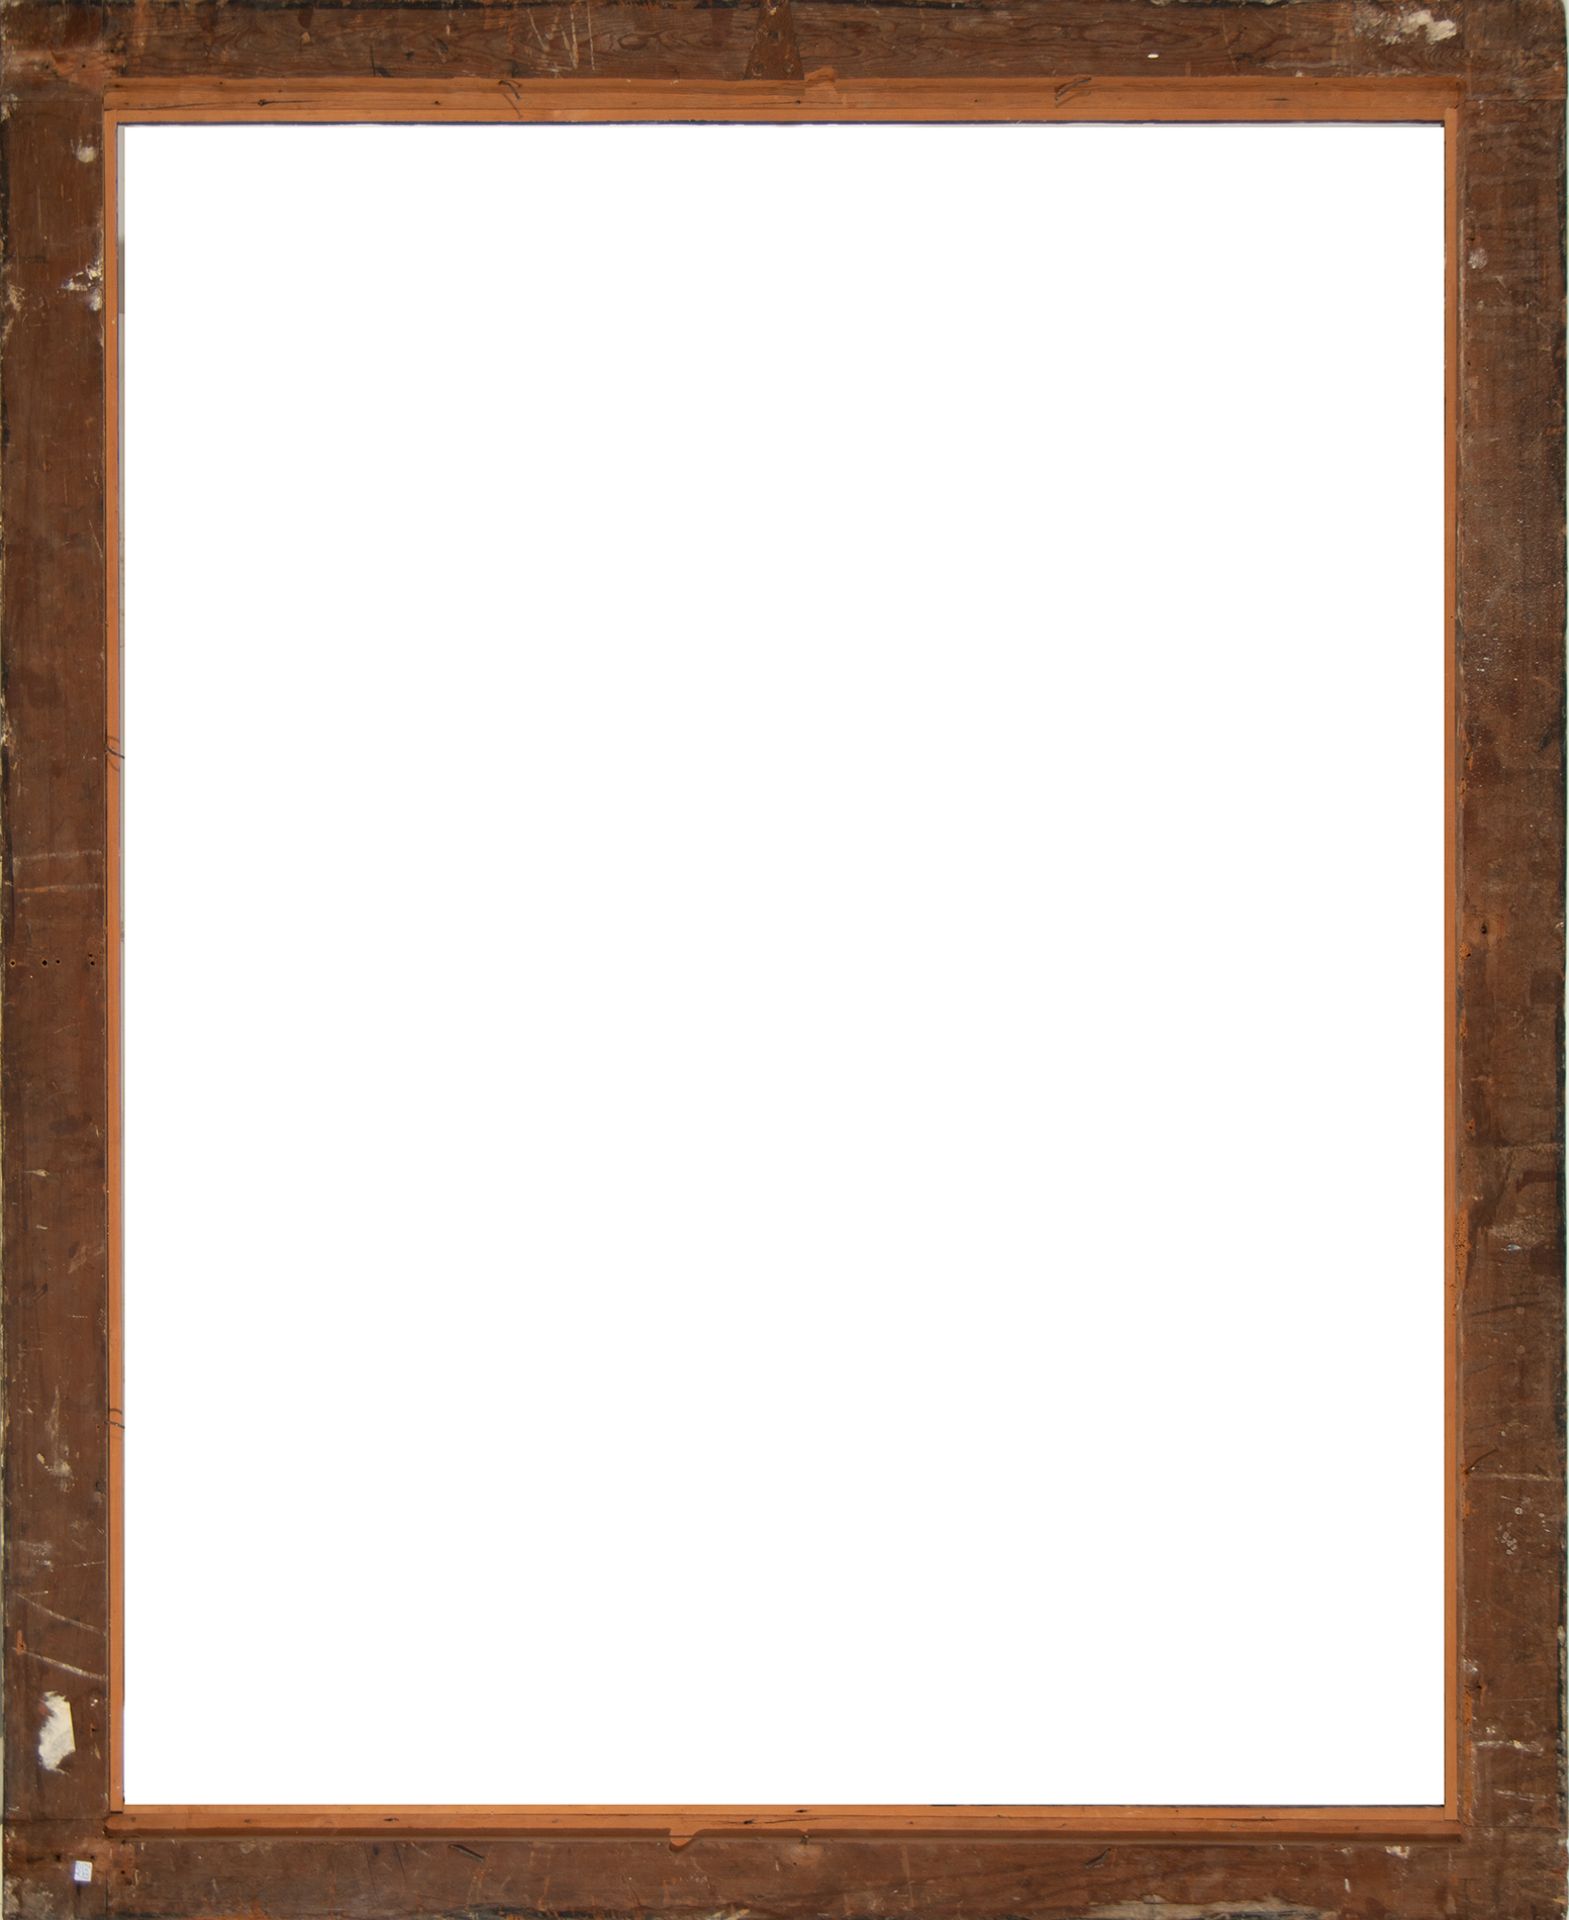 Spanish Polychromed frame, 17th century - Image 8 of 8